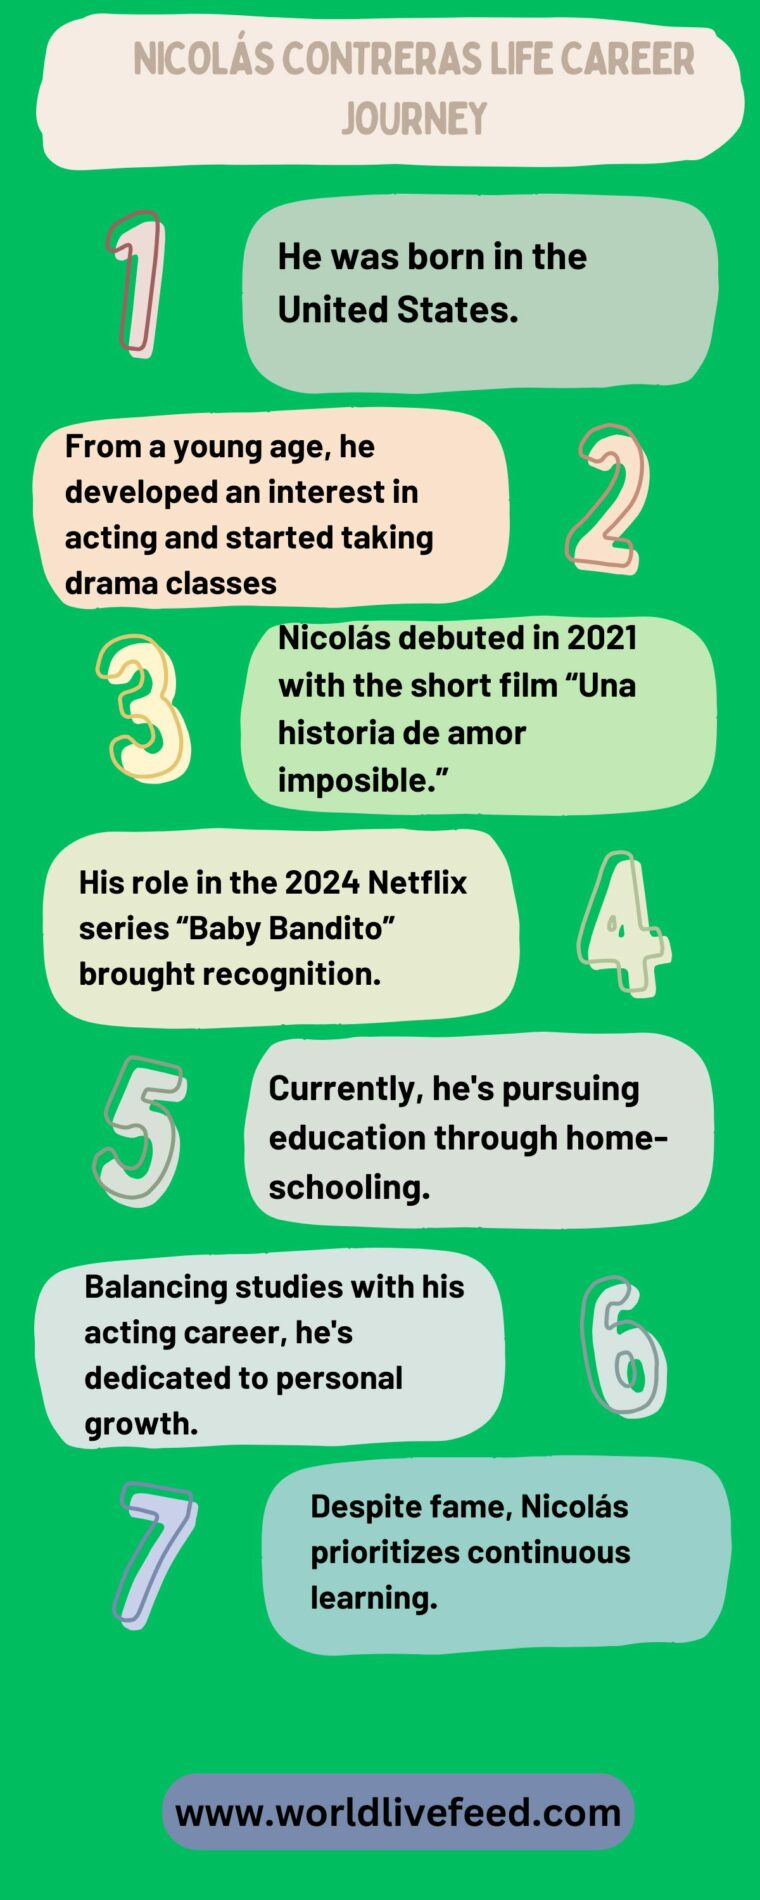 Nicolás Contreras Life Career Journey